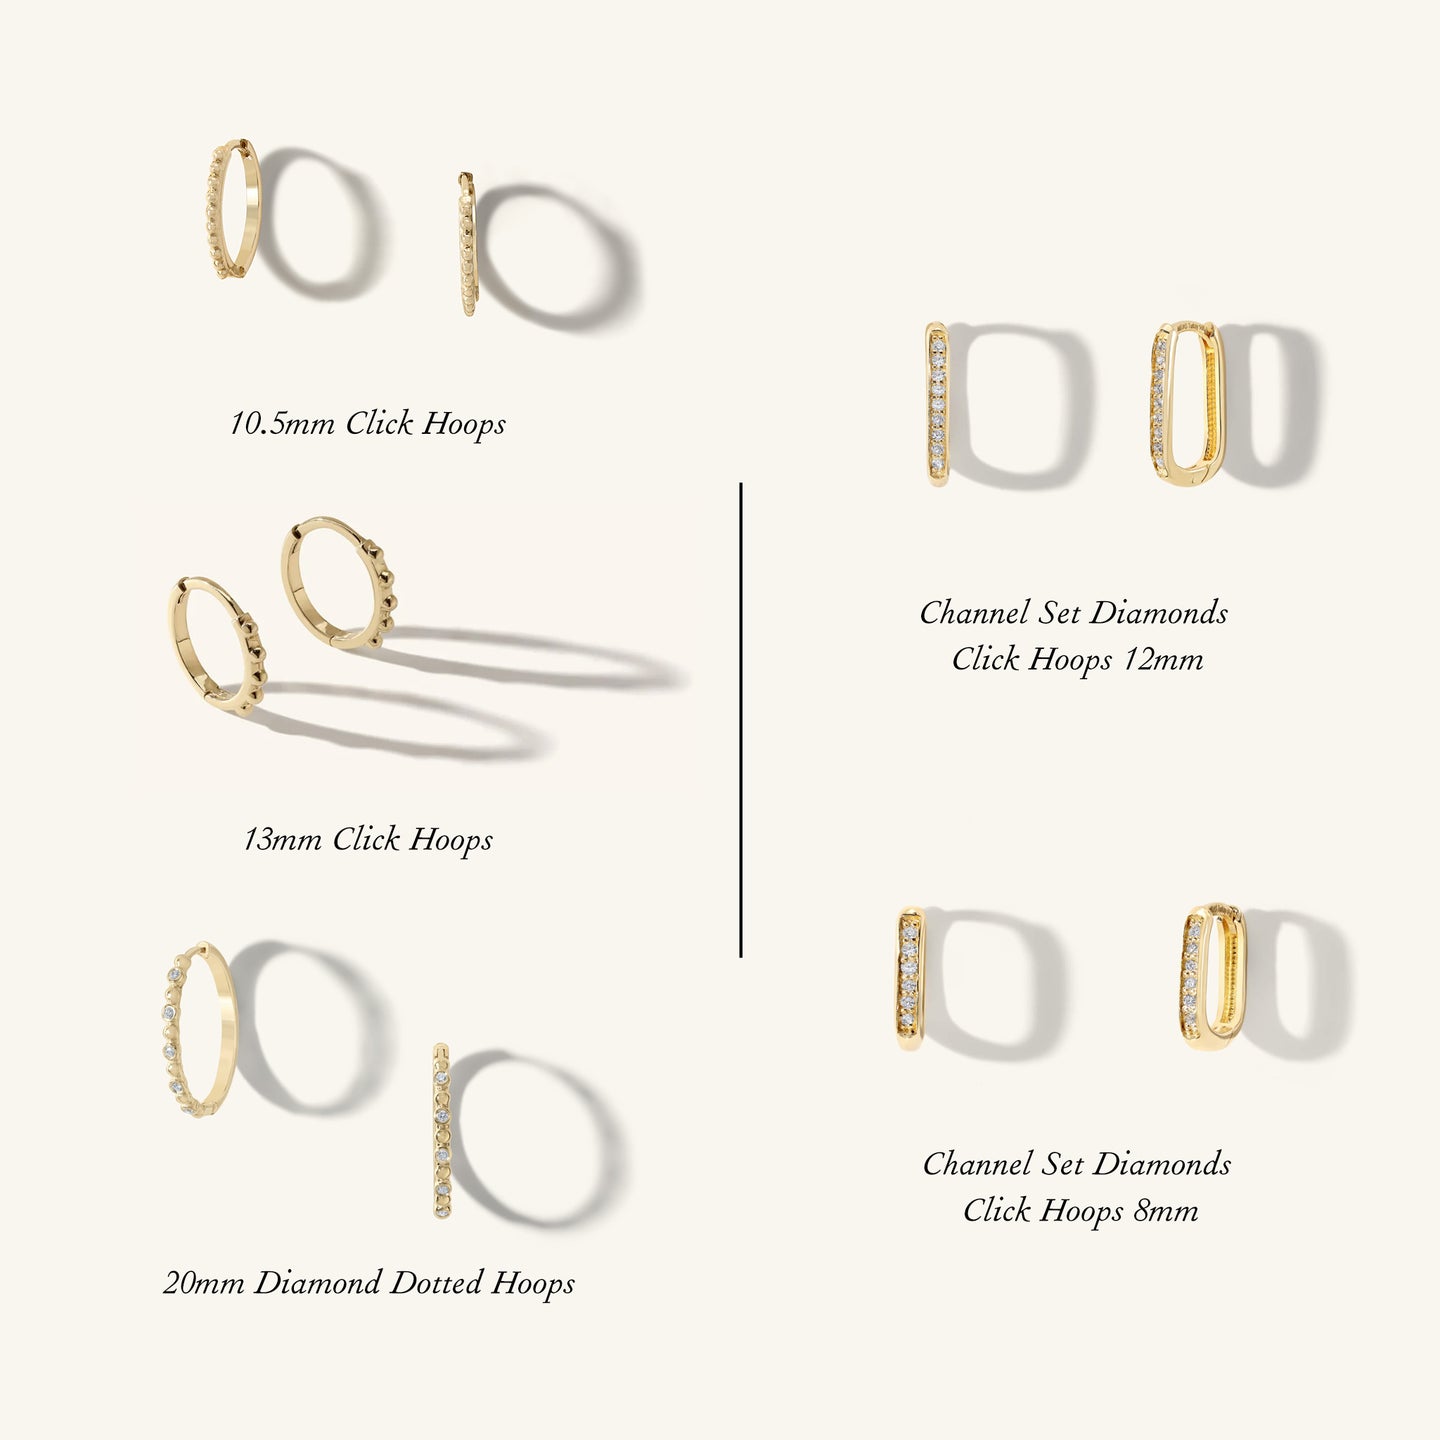 Pear Shaped Diamond Earring Charms